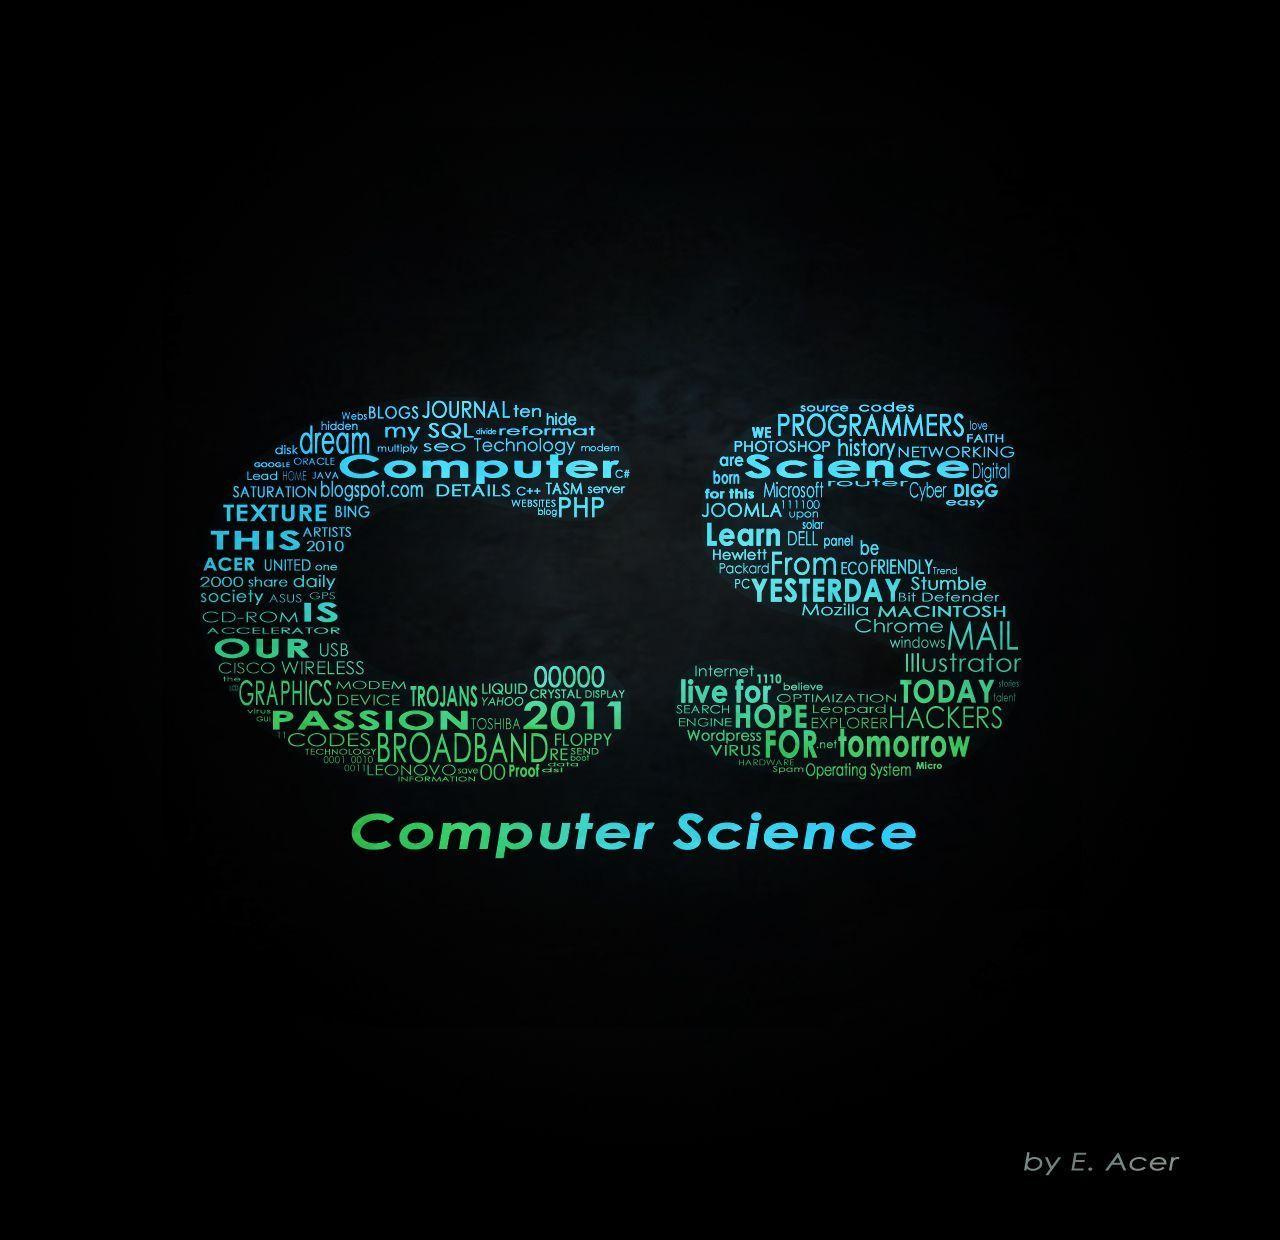 Computer Science Wallpaper. Computer science engineering, Computer science, Computer engineering